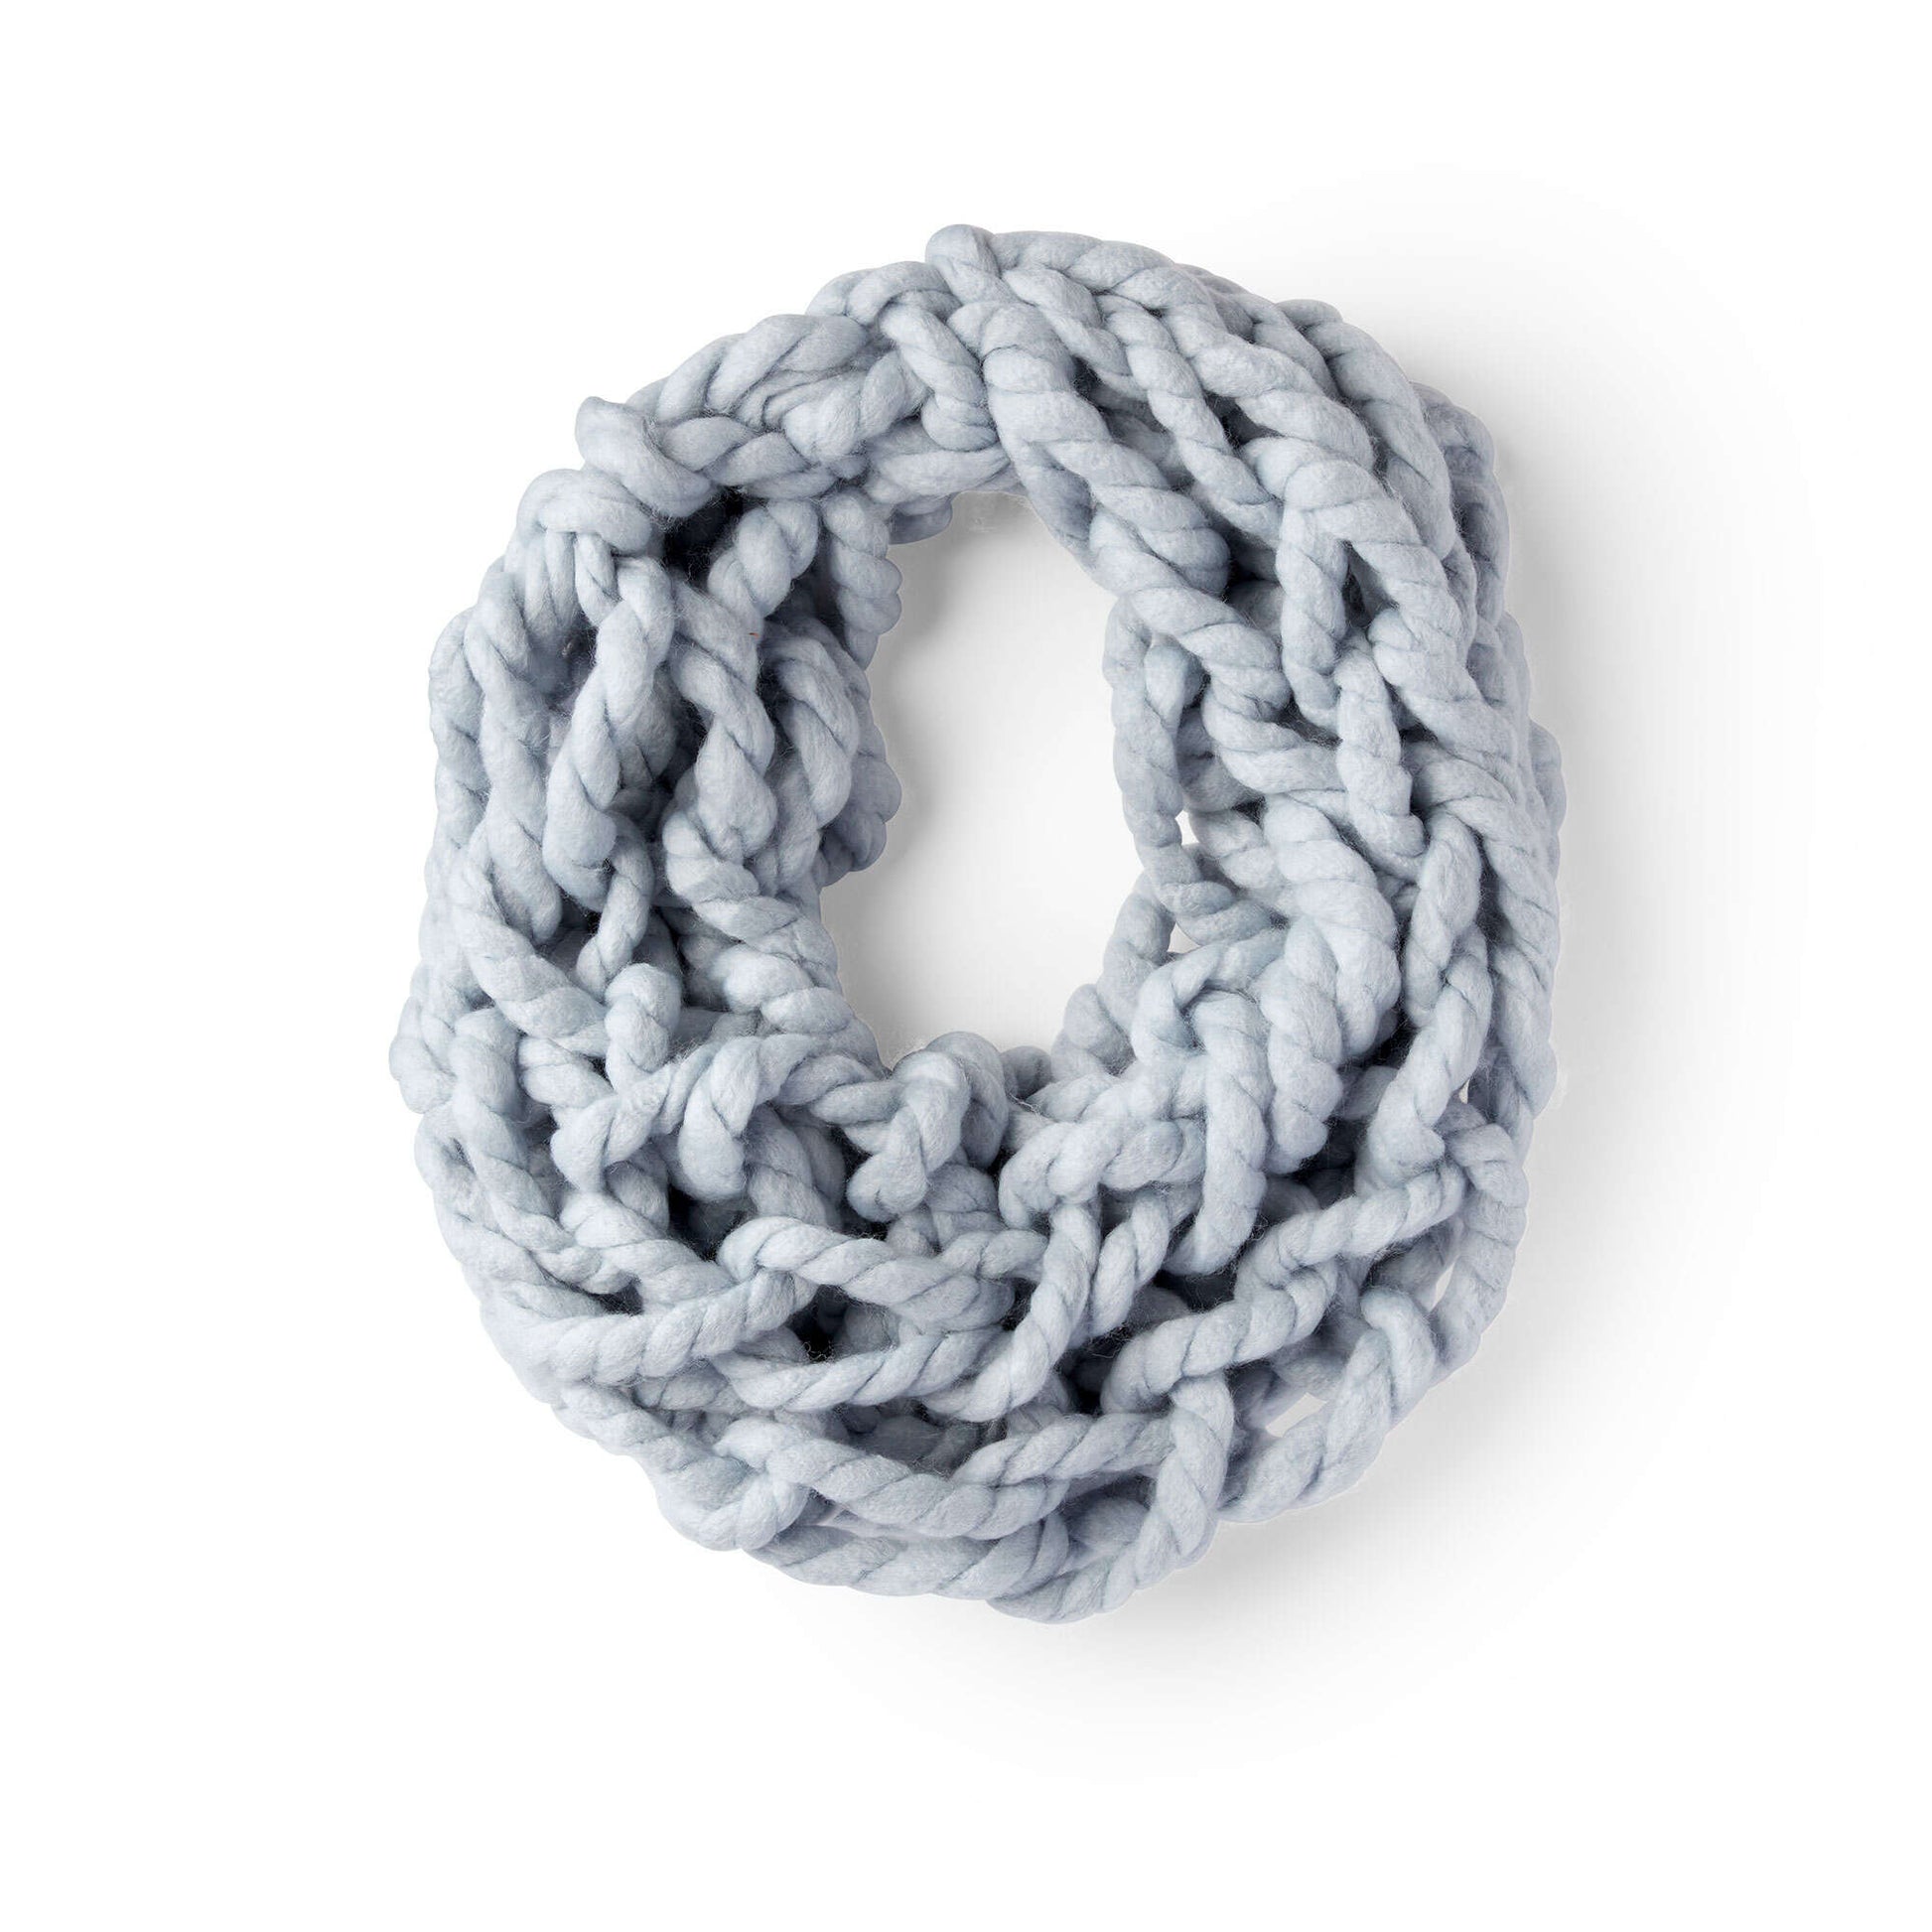 Arm Knit Cowl : learn to knit kit + 8 balls of Knitca Veil yarn